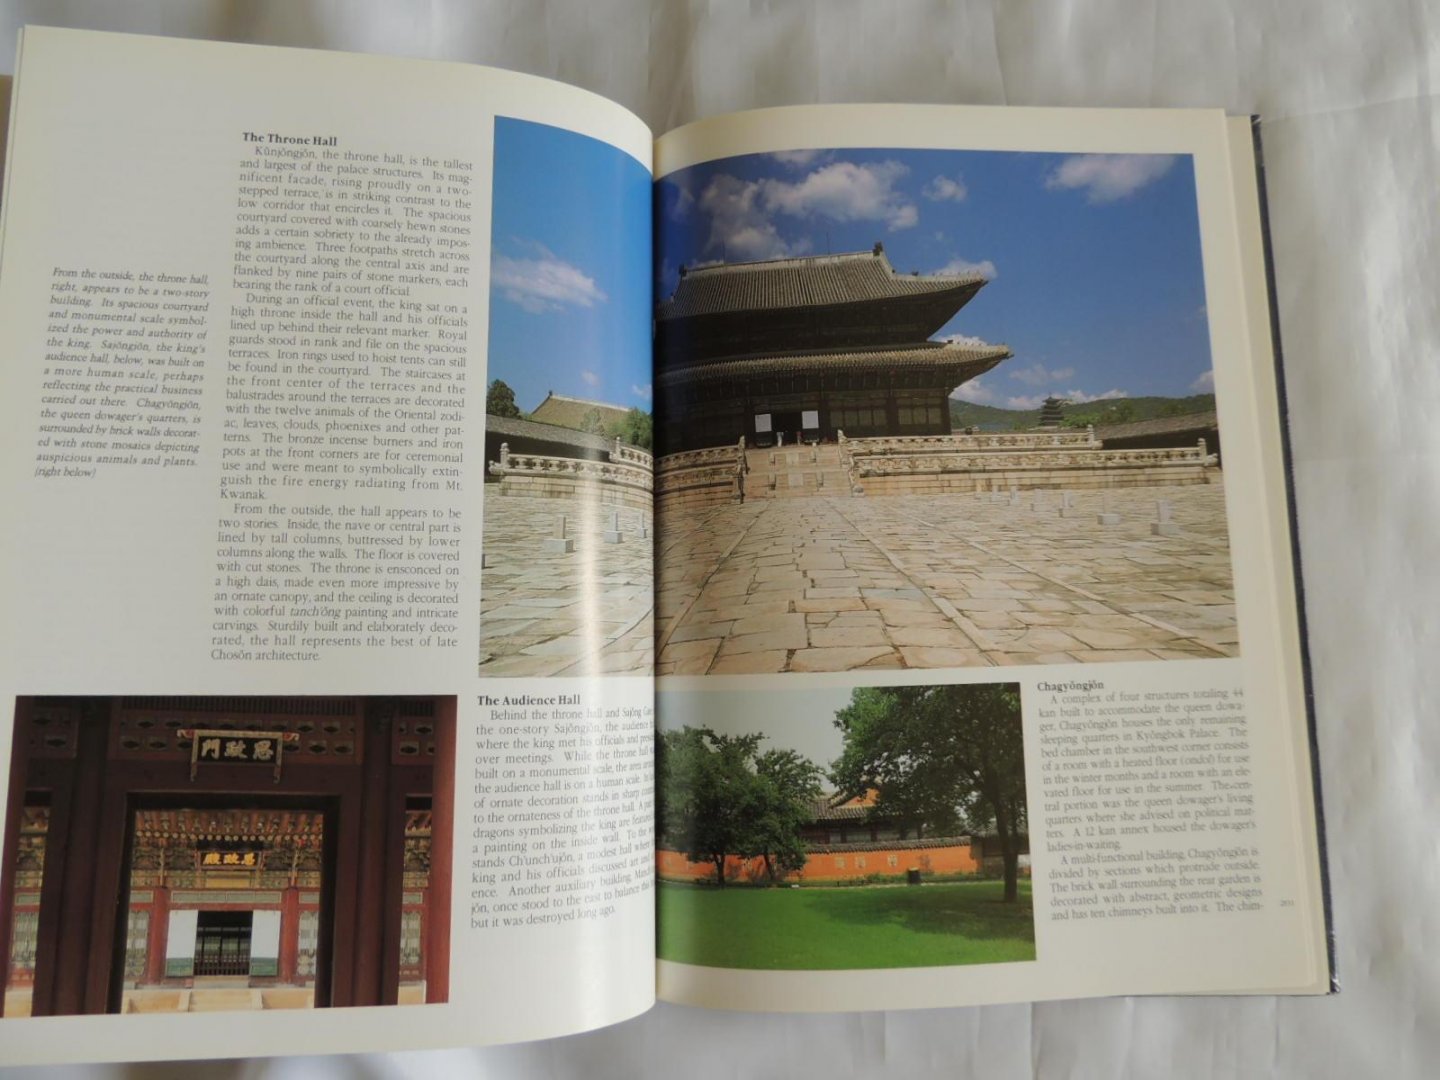 Pickering julie. korea foundation - Korean Cultural Heritage -Fine Arts - Thought & religion - Part 1 -2 complete set /volume I - II